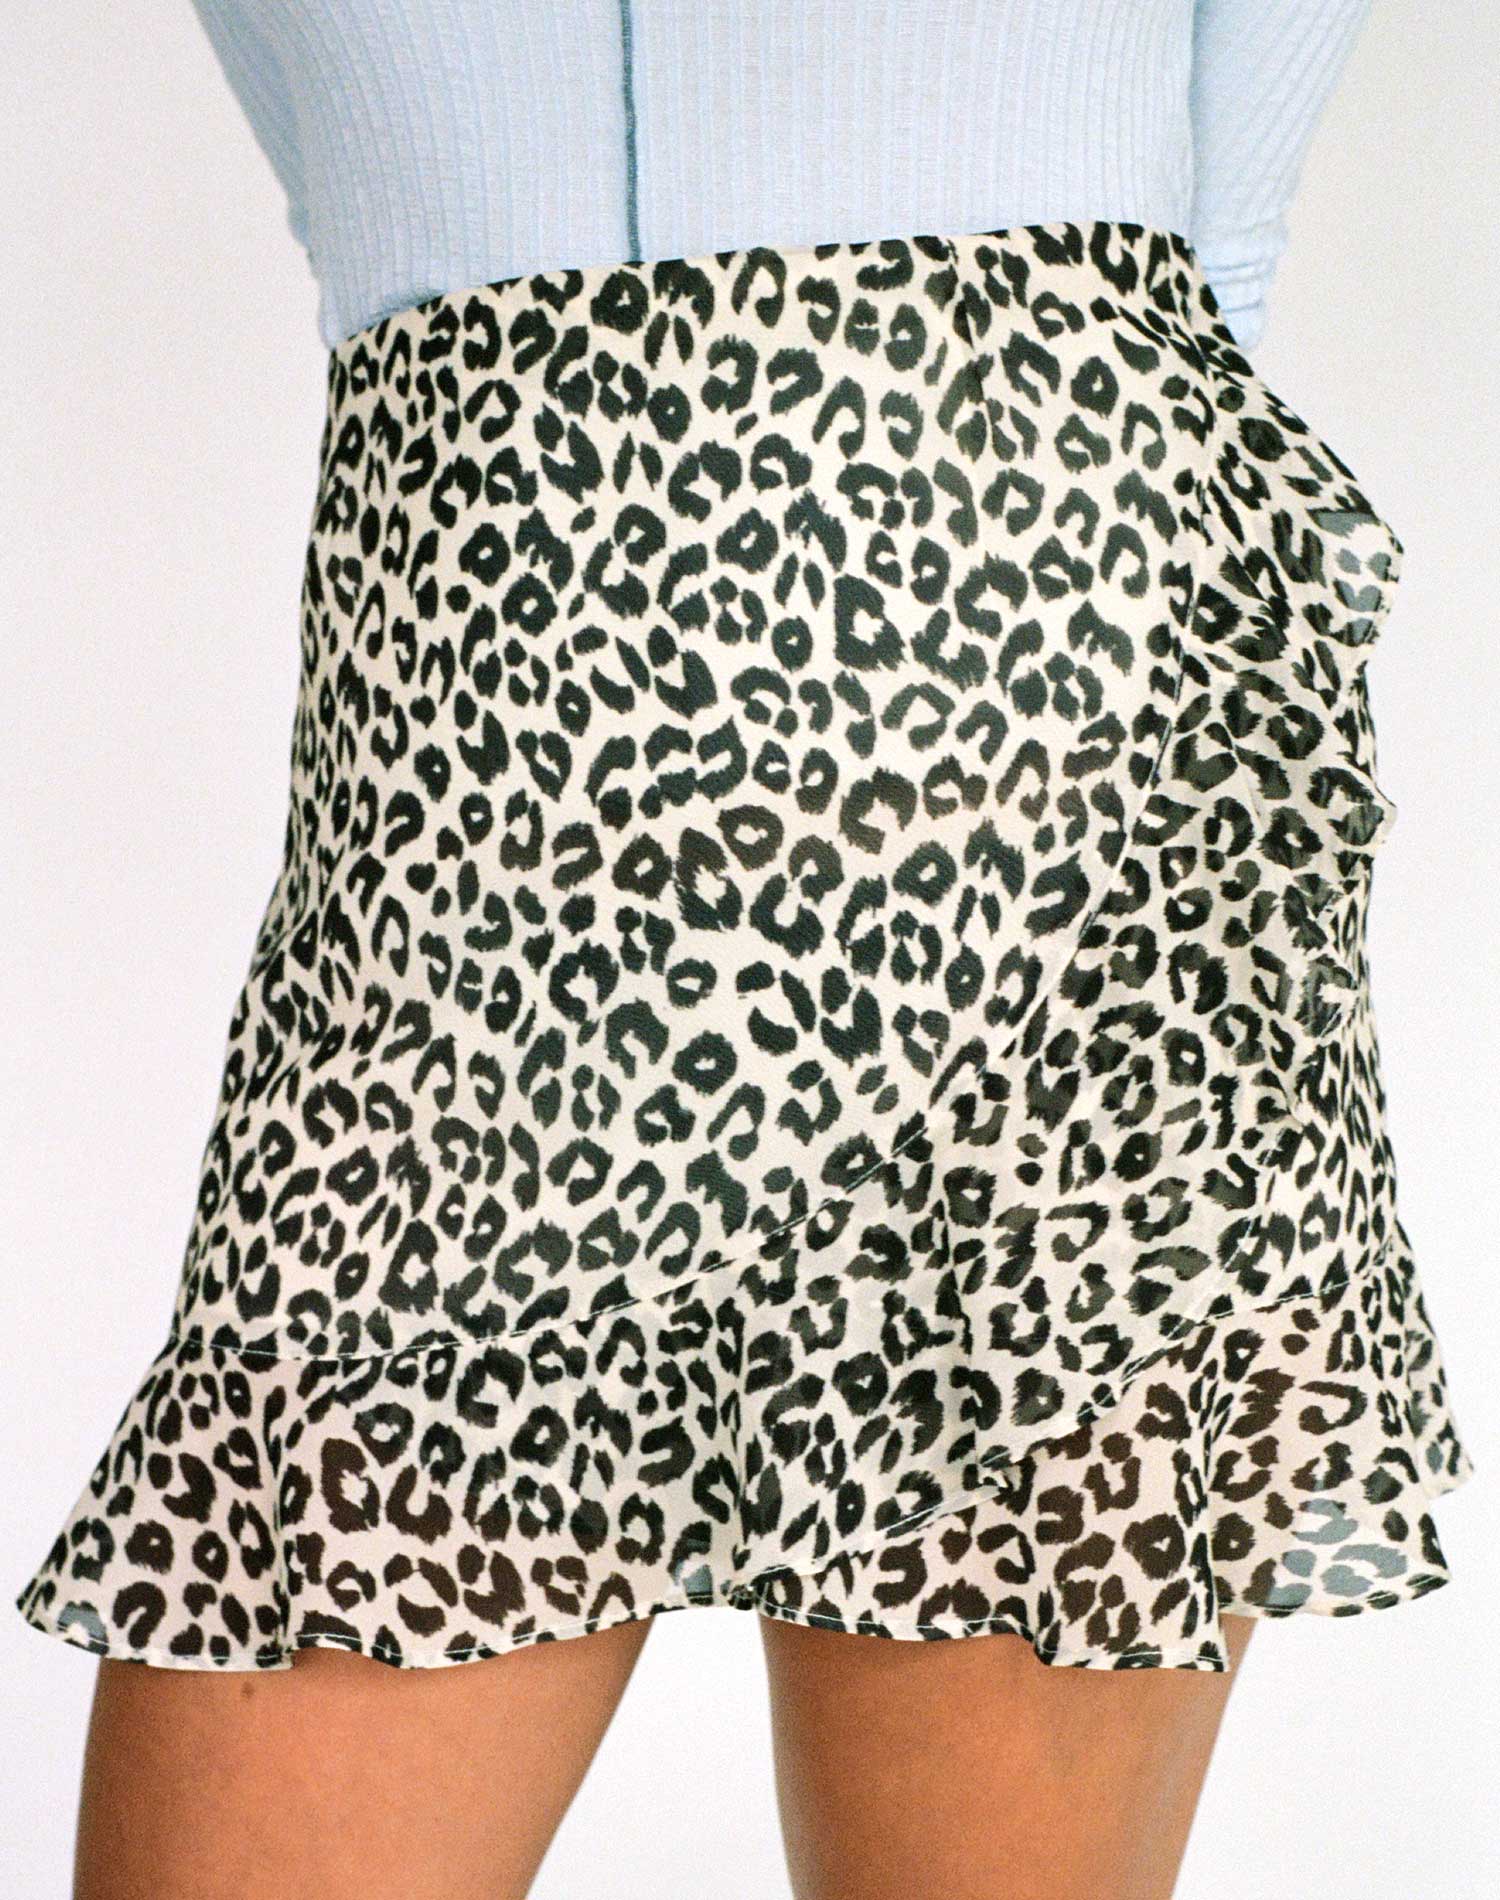 The Artemis Leopard Ruffle Skirt